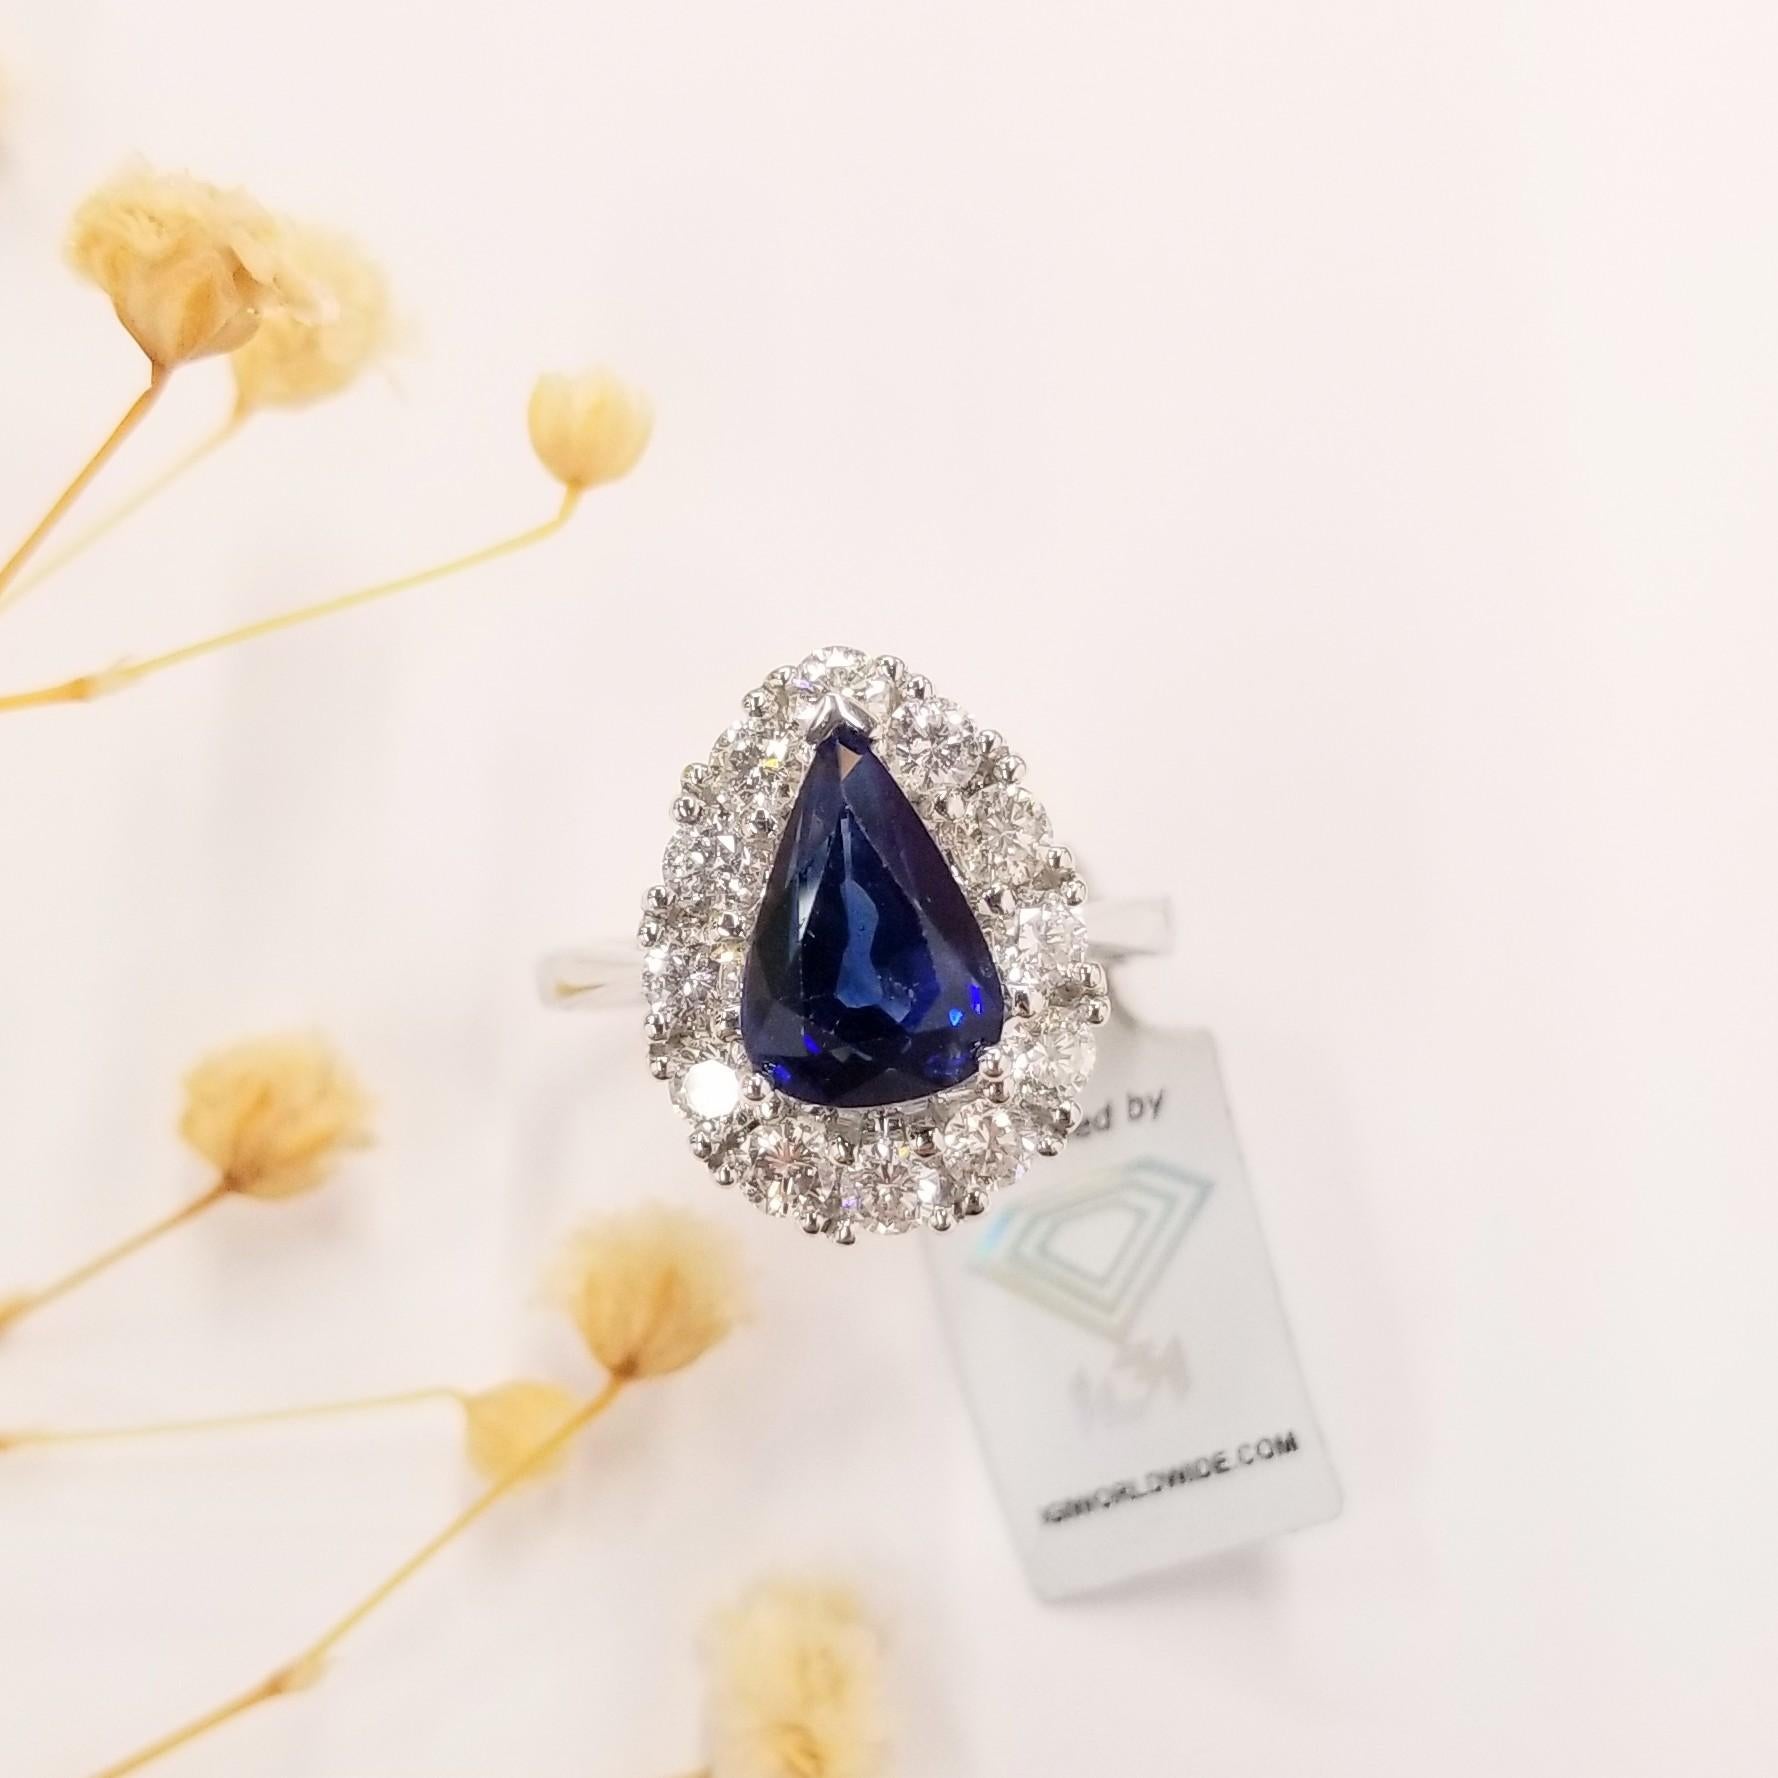 IGI Certified 3.08 Carat Blue Sapphire & Diamond Ring in 18K White Gold For Sale 5